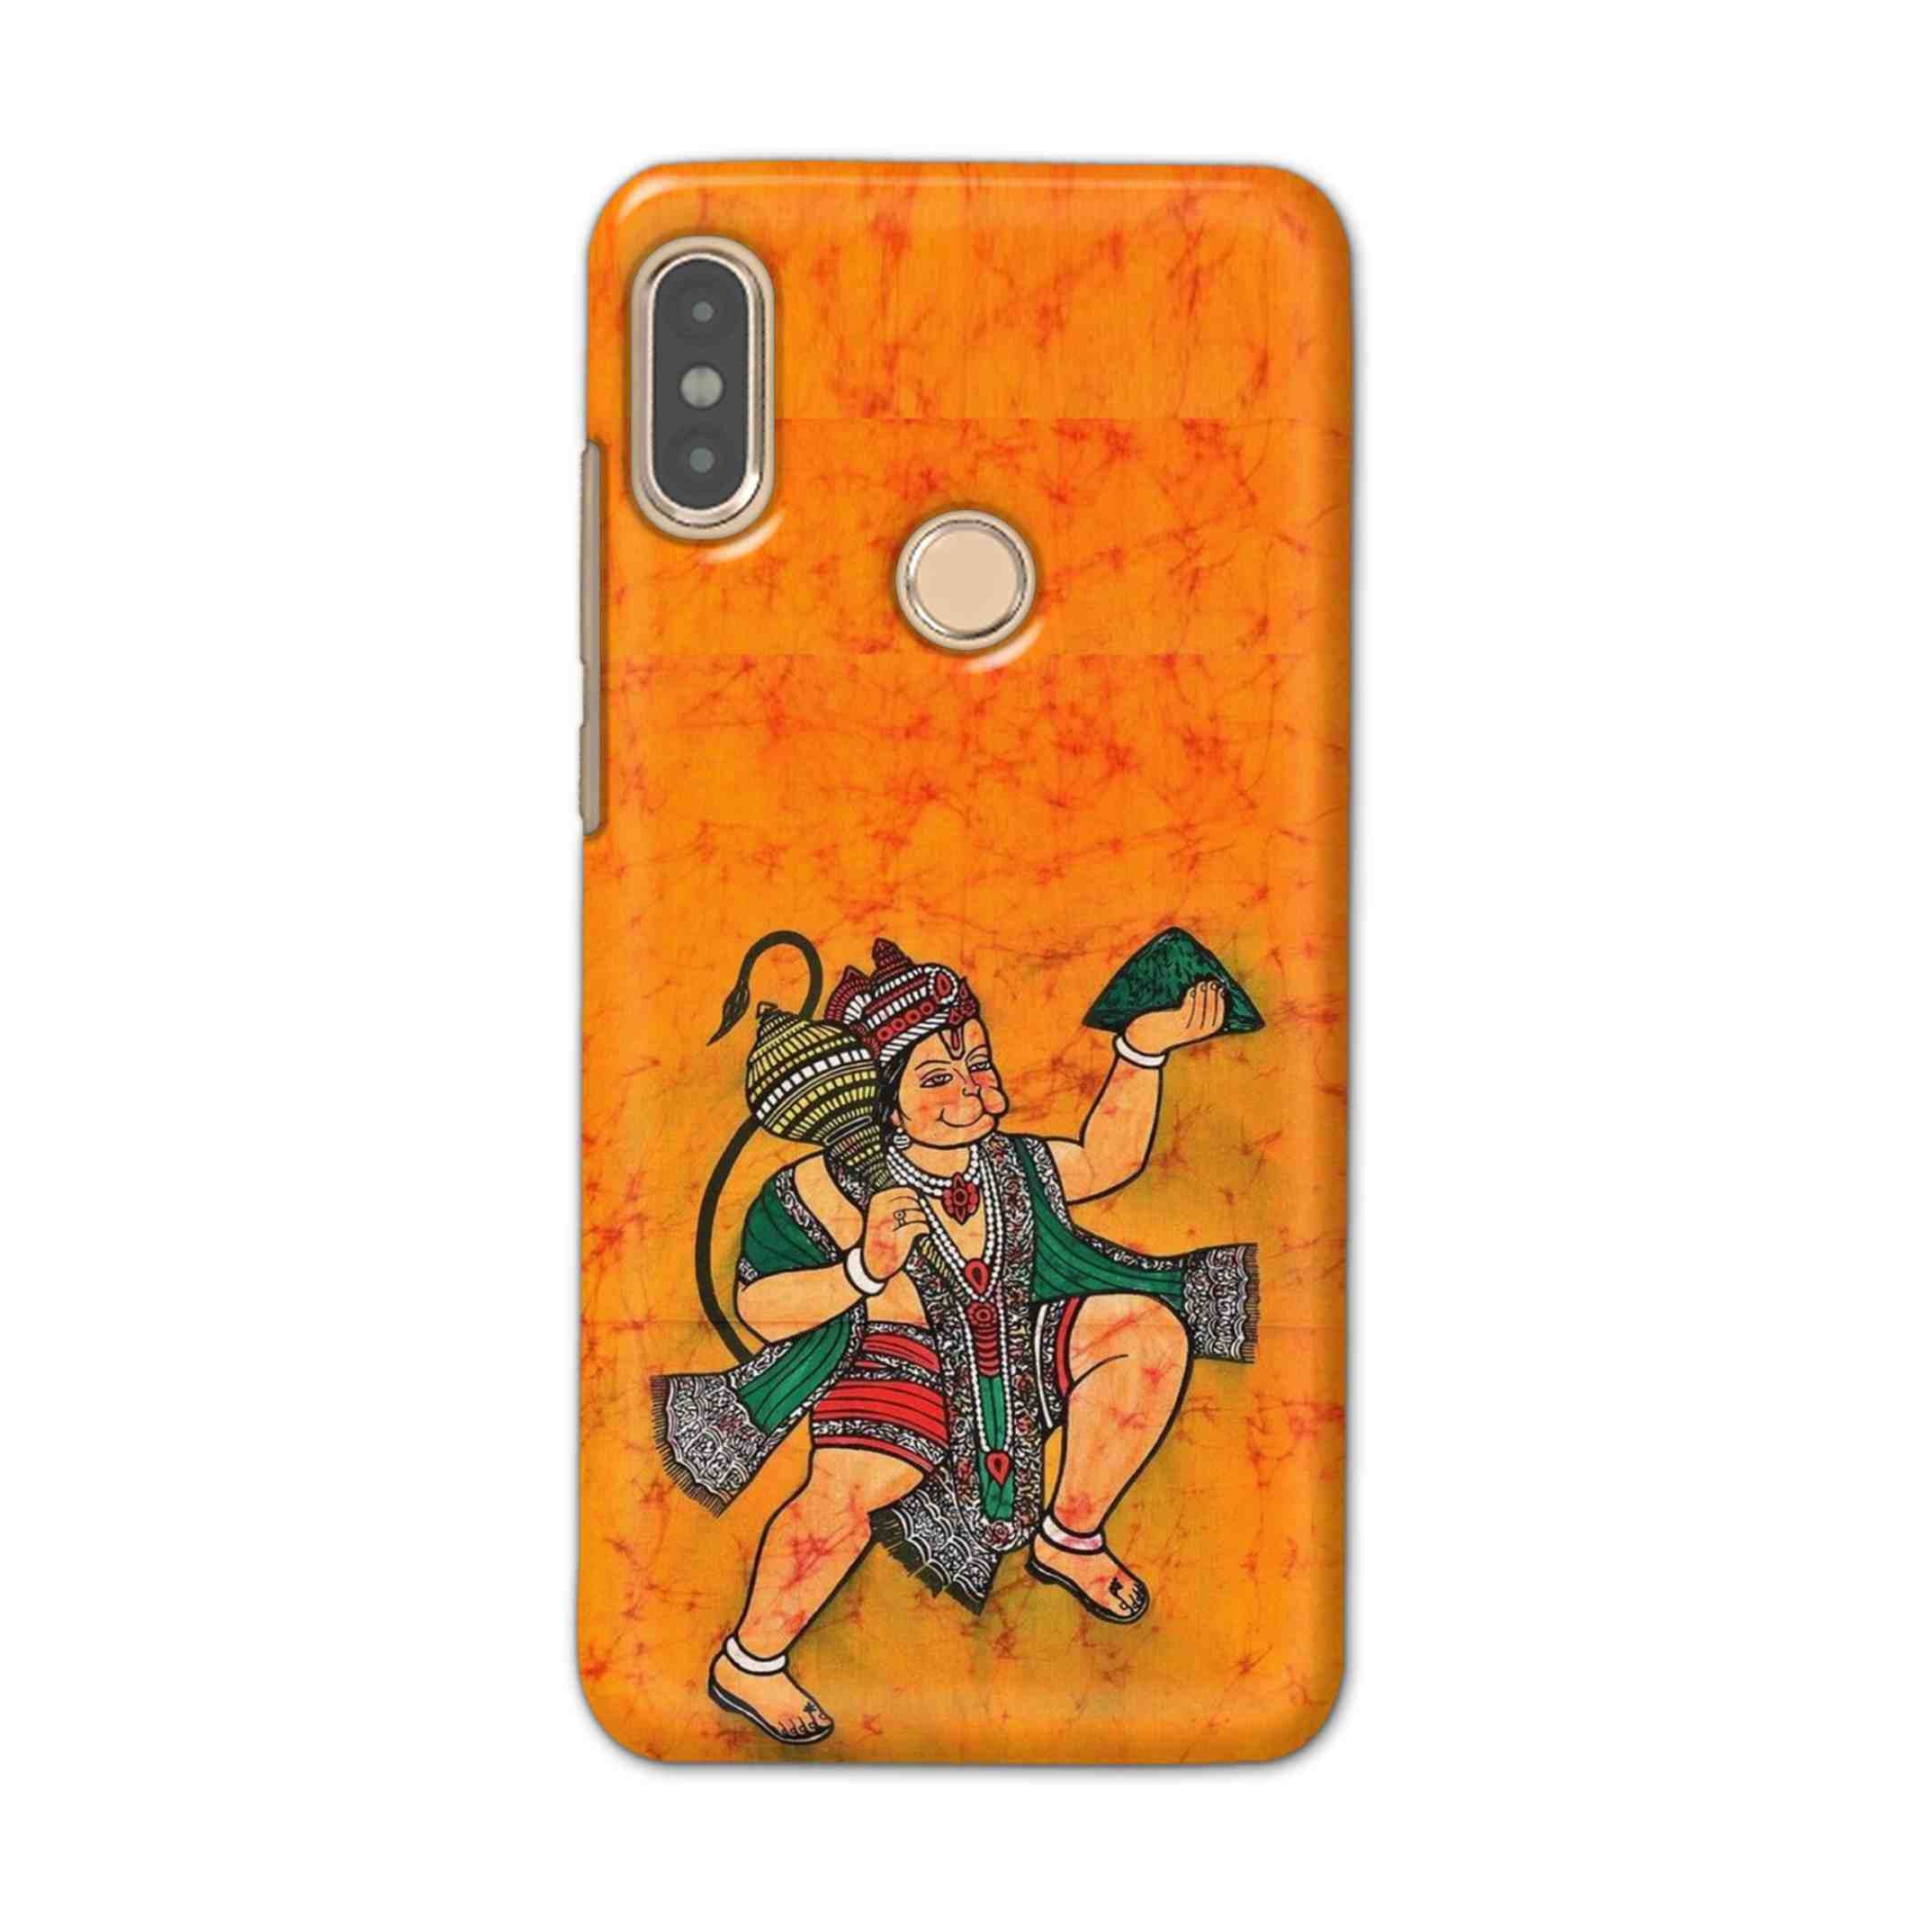 Buy Hanuman Ji Hard Back Mobile Phone Case Cover For Xiaomi Redmi Note 5 Pro Online